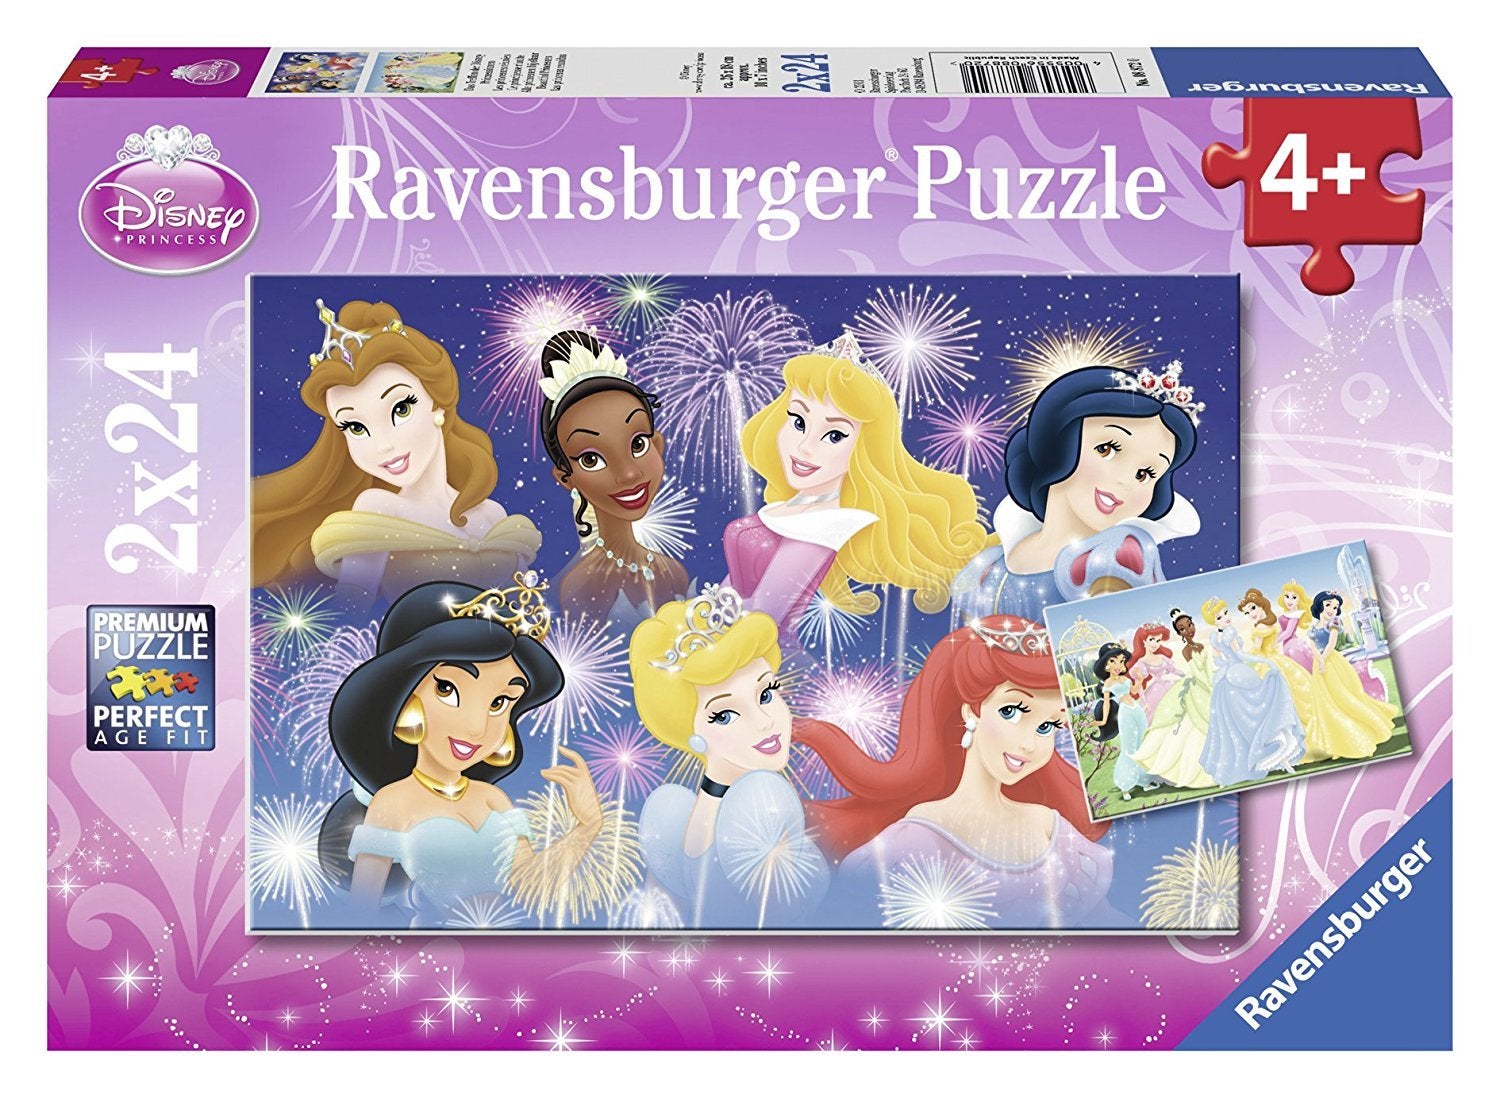 Ravensburger - Disney The Princesses Gathering Puzzle 2x24pc 